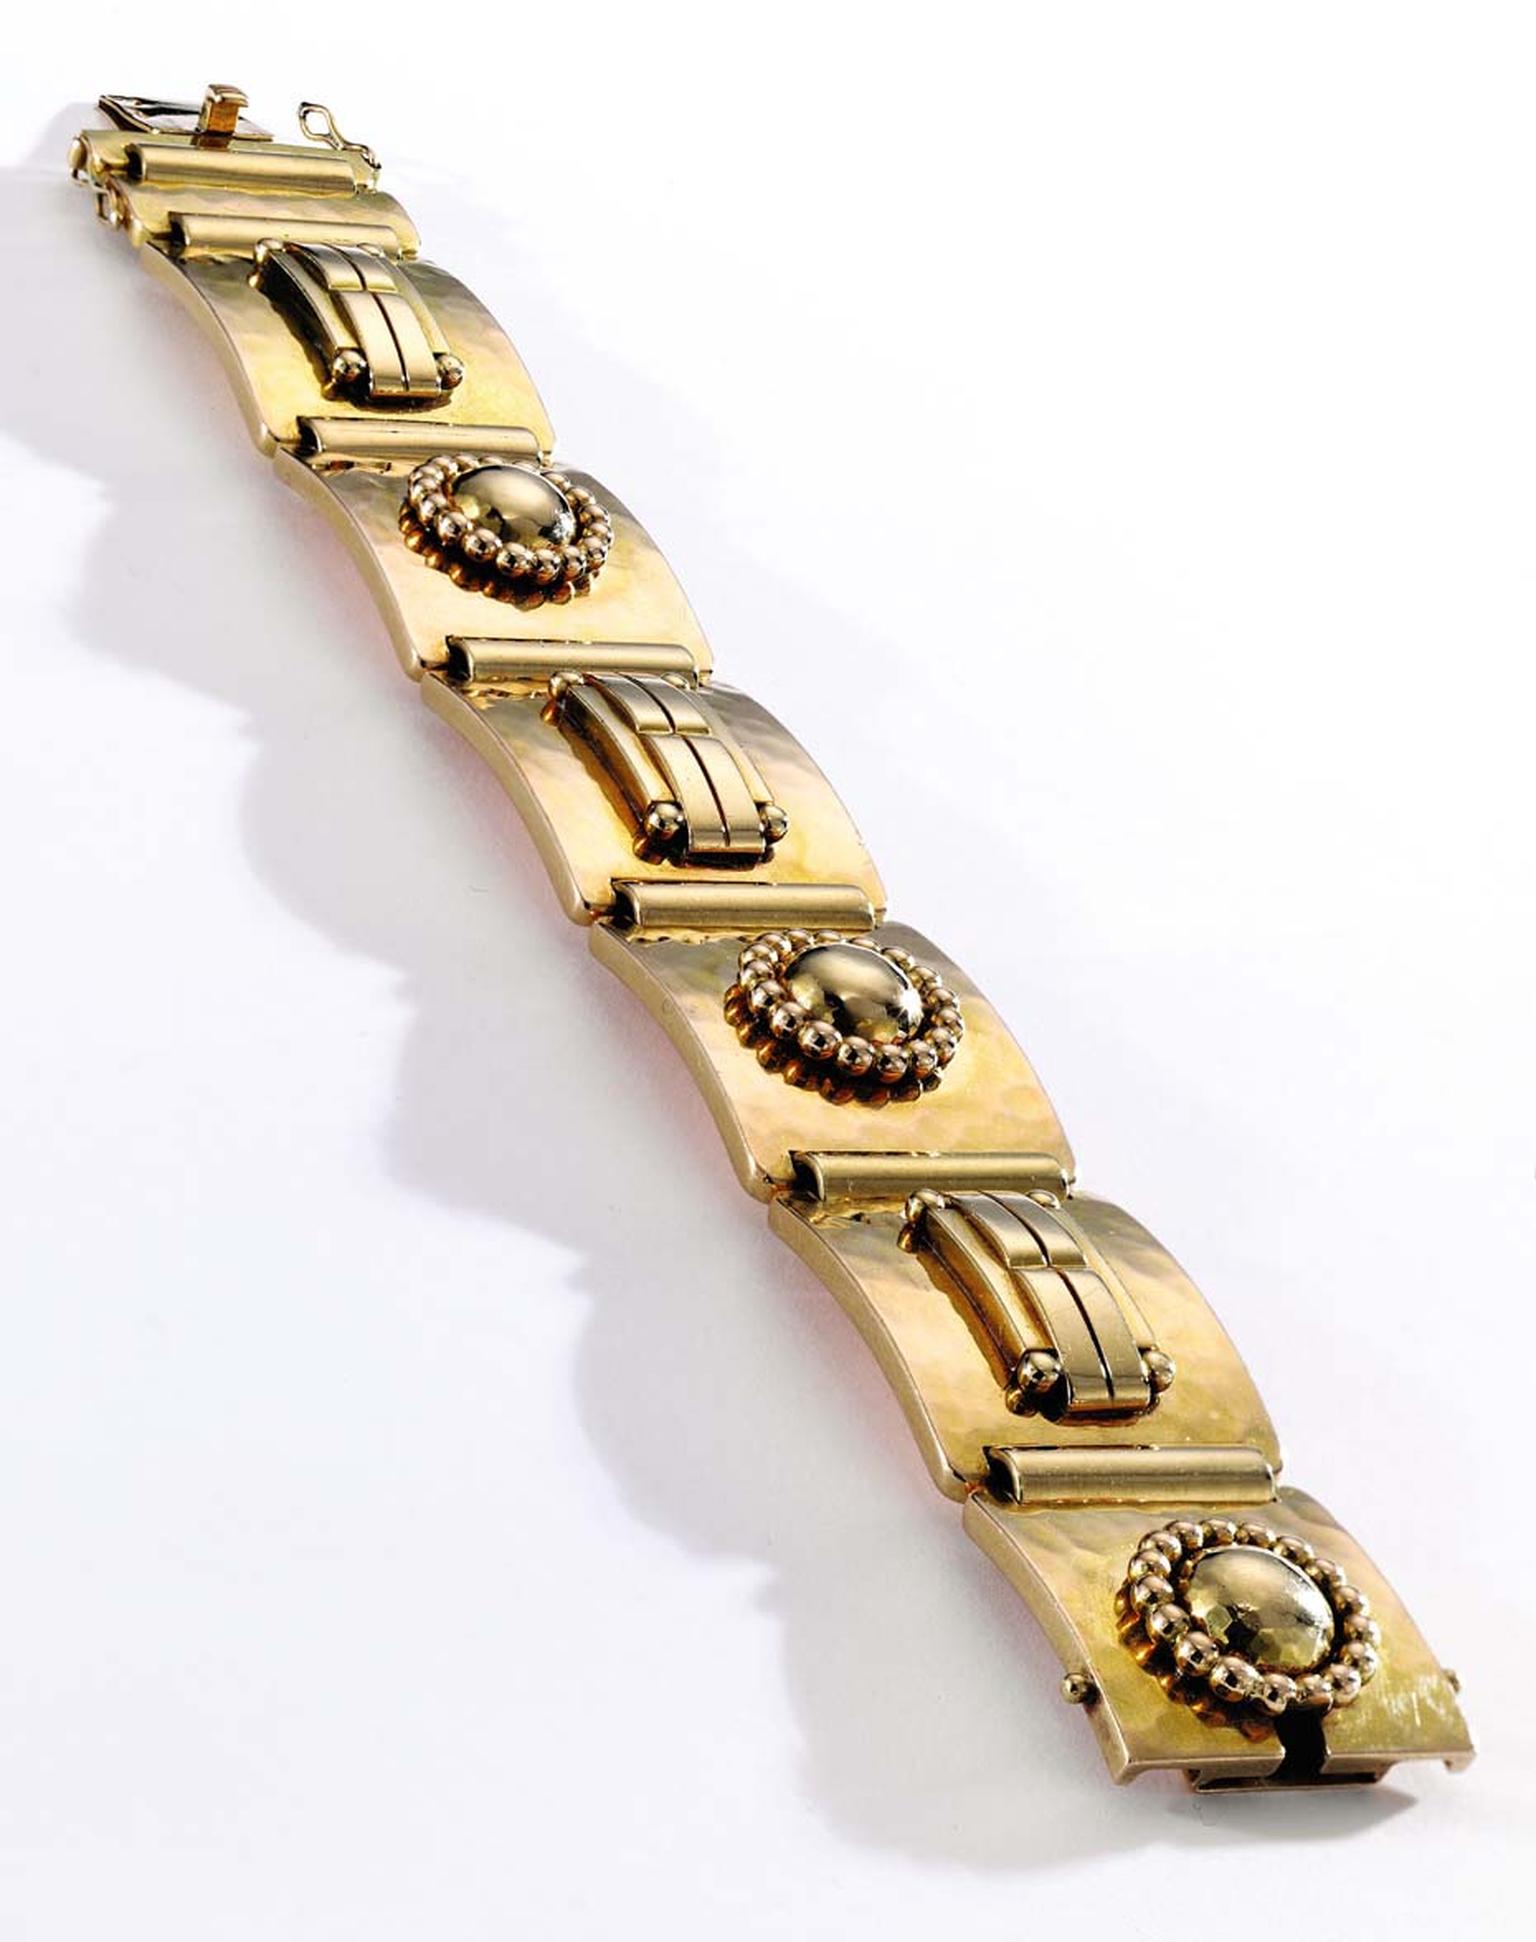 Jean Després gold bracelet, circa 1935 (estimate: $75-85,000).